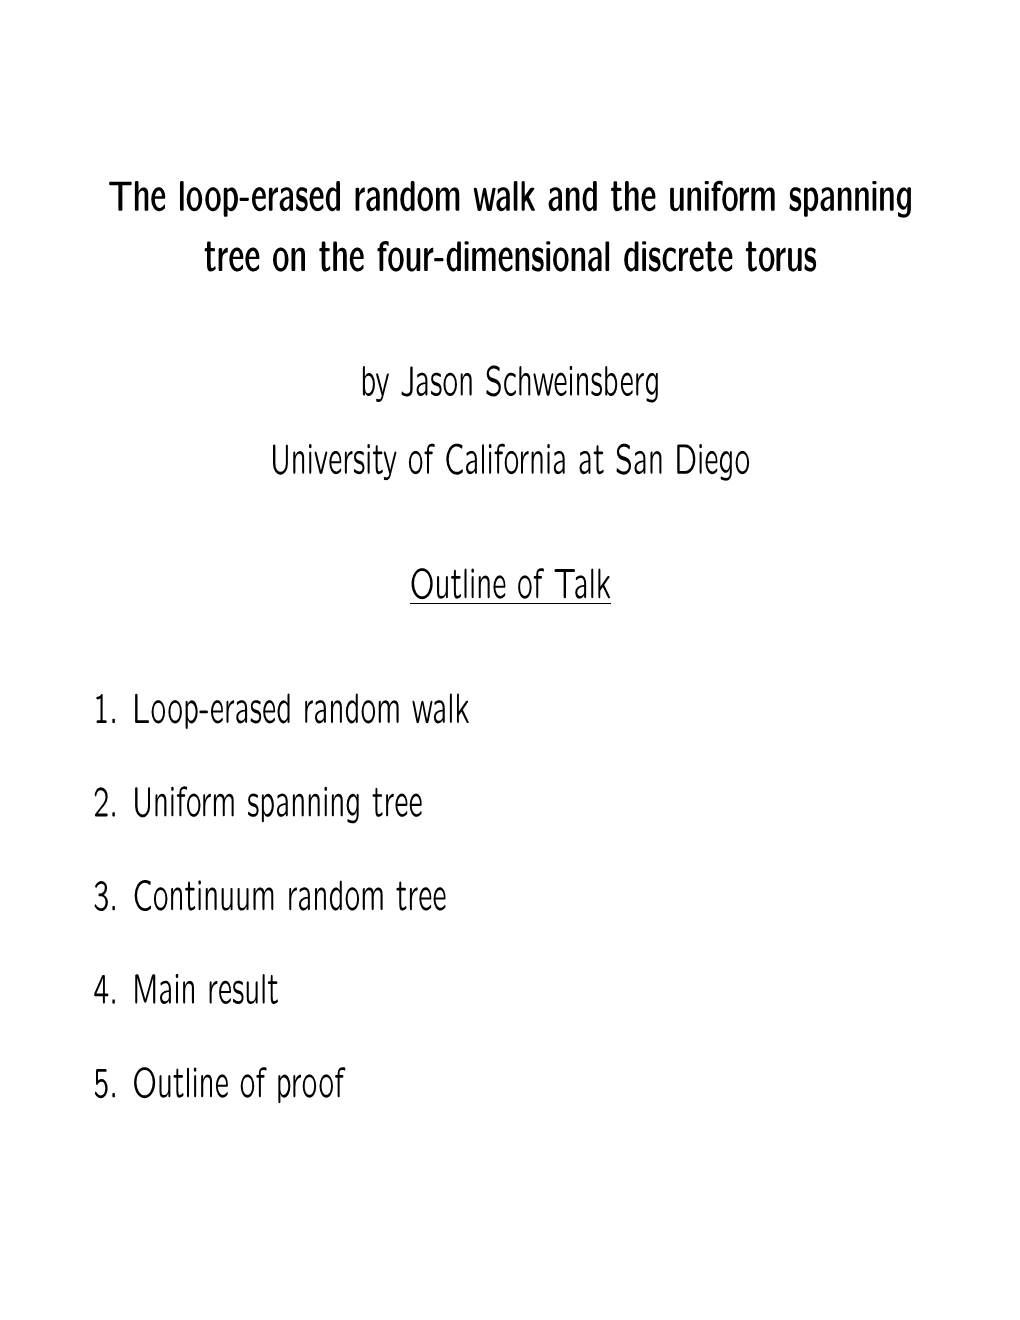 The Loop-Erased Random Walk and the Uniform Spanning Tree on the Four-Dimensional Discrete Torus